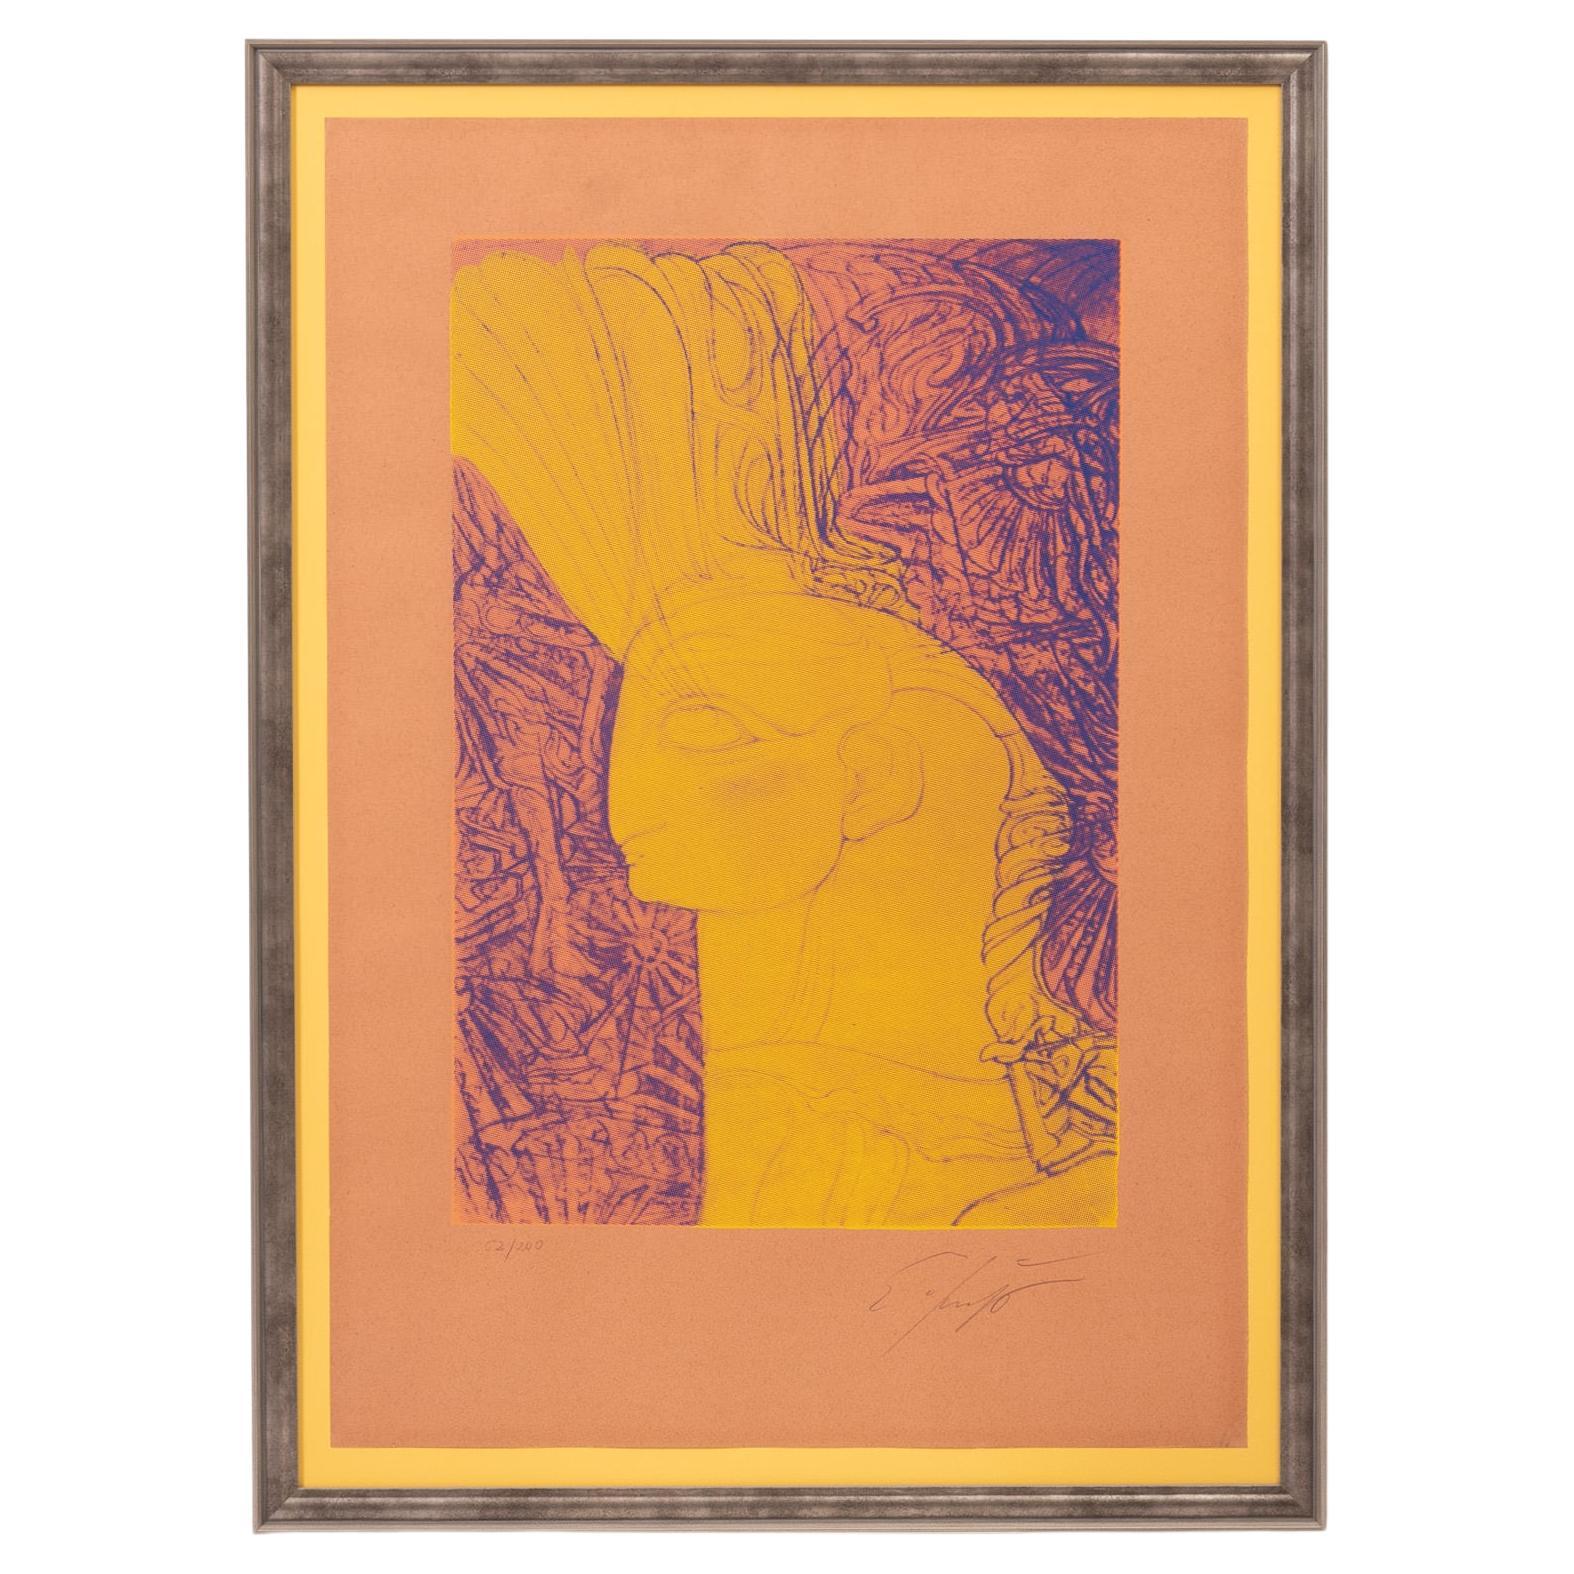 Ernst Fuchs (1930 - 2015)  "Head of a cherub", created in 1982  Color silkscreen